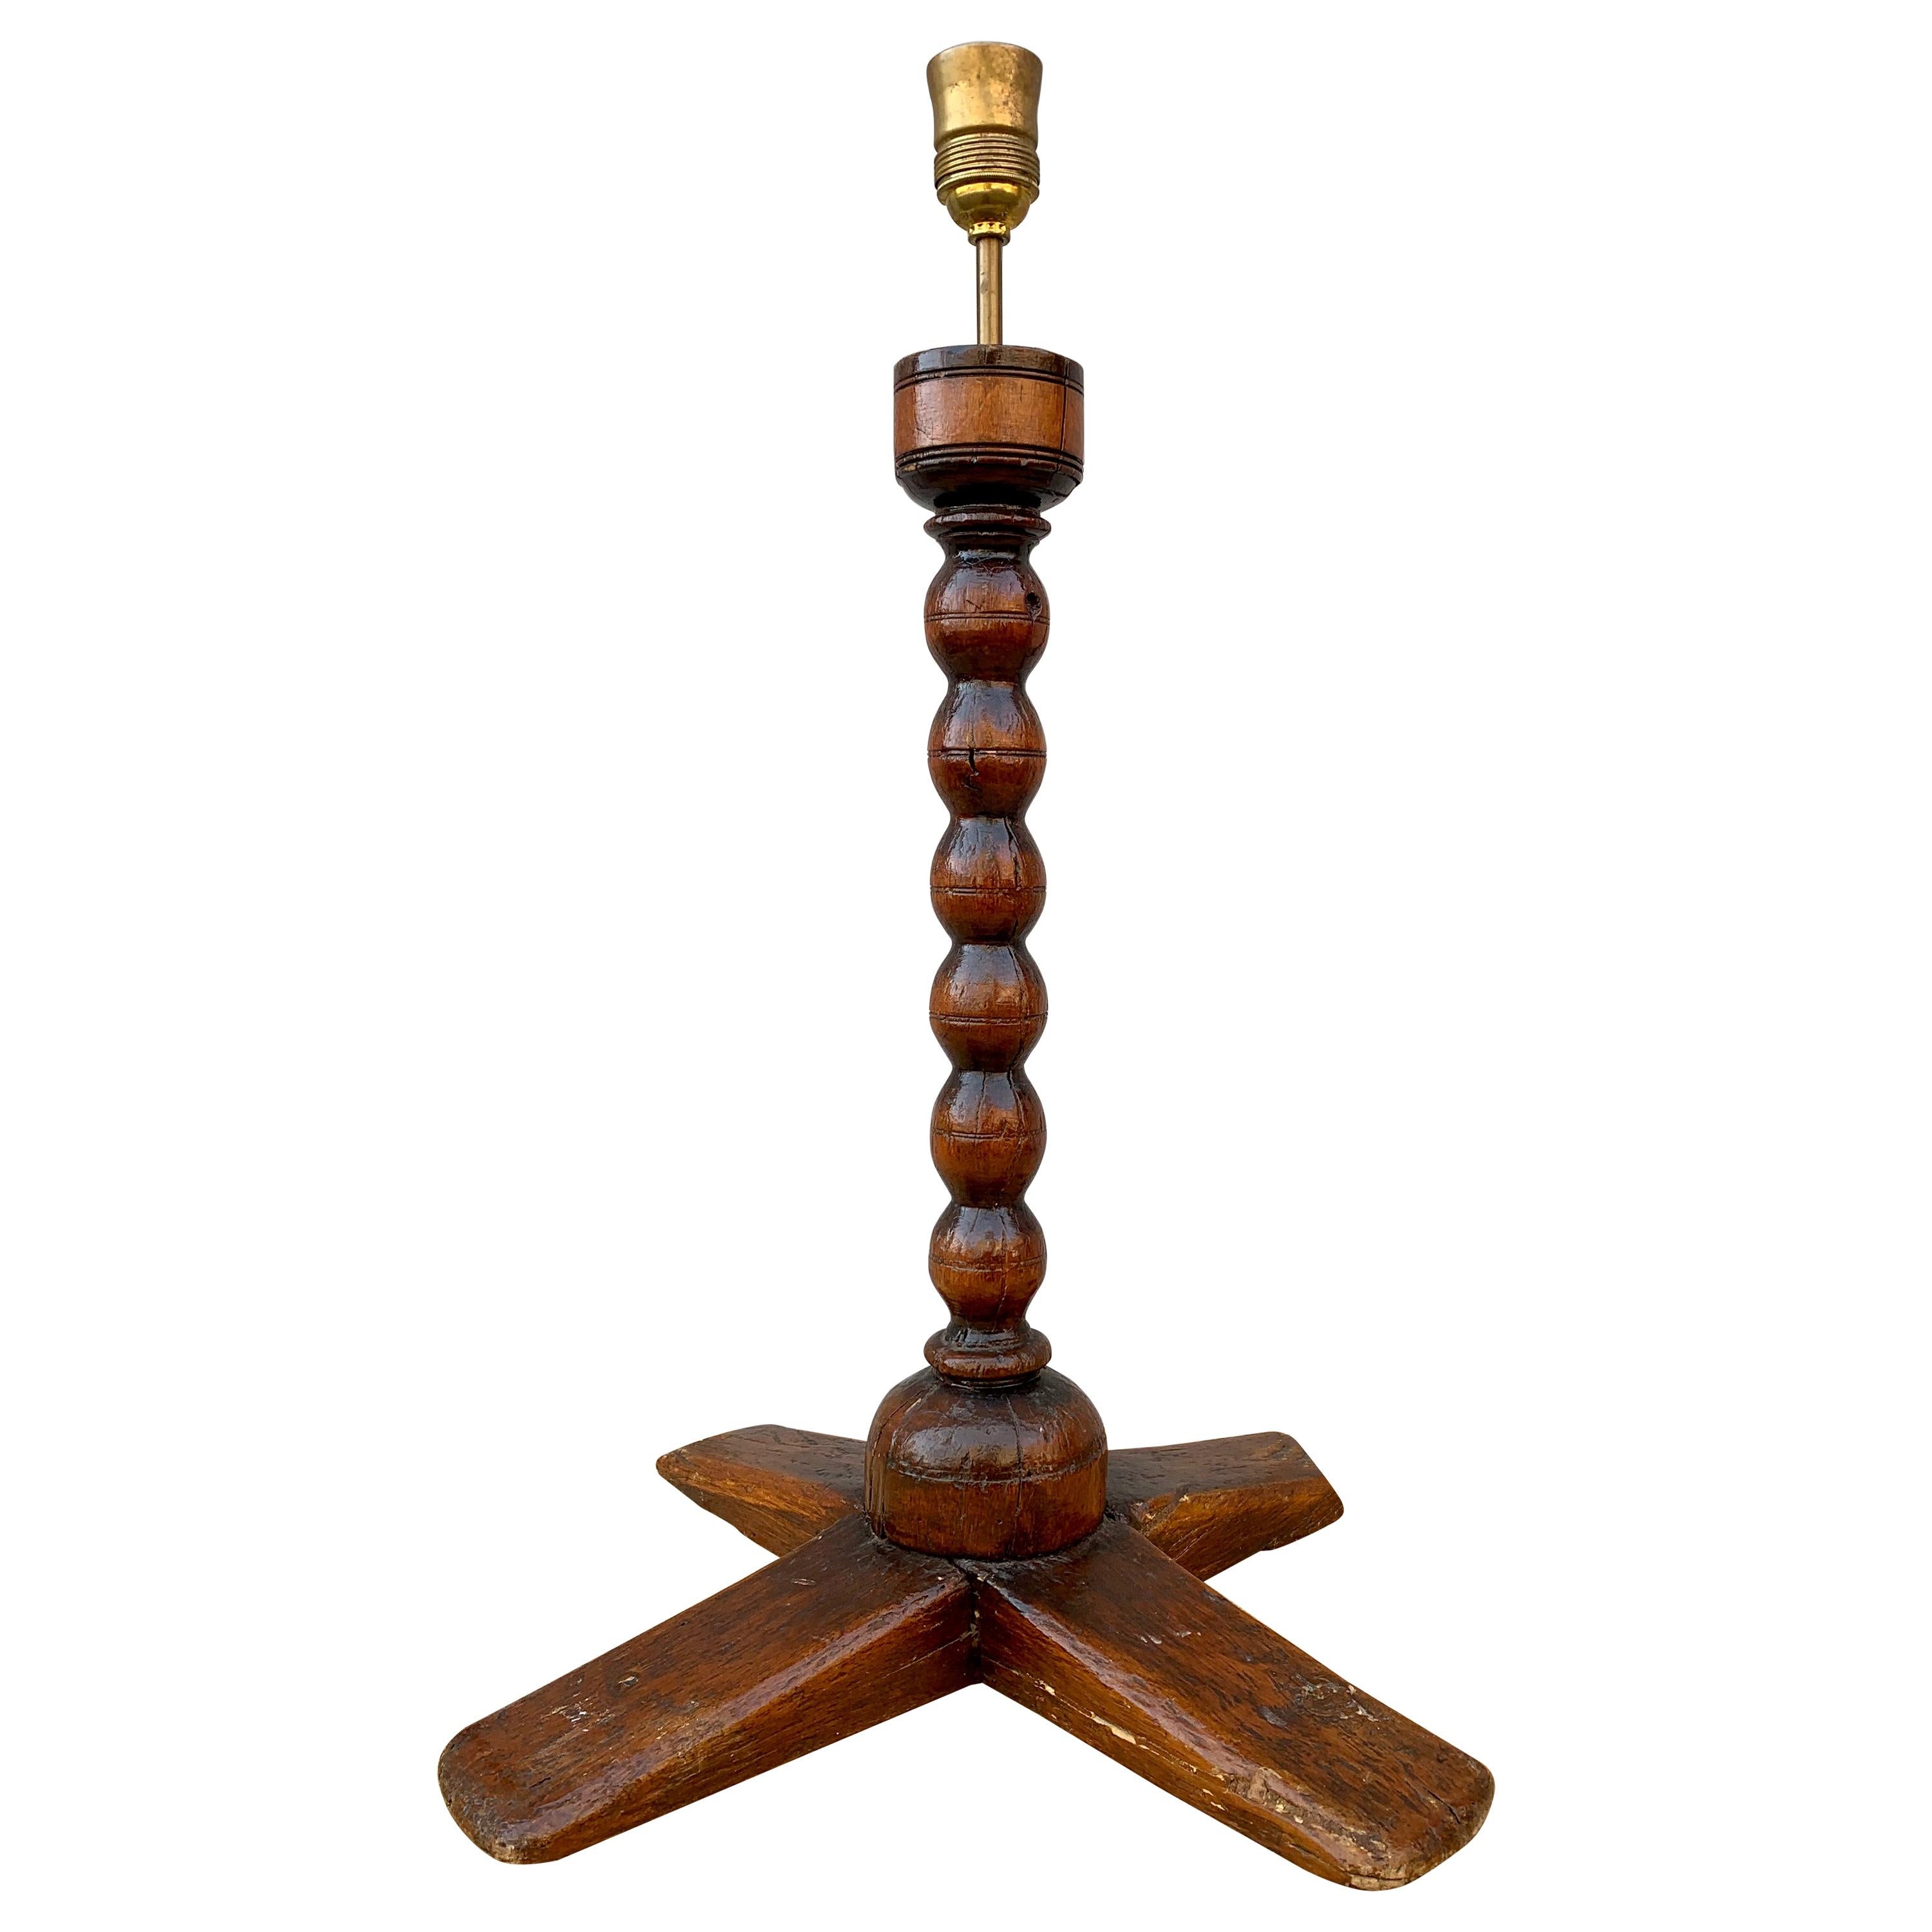 Swedish Folk Art Candlestick Table Lamp, Dated 1737